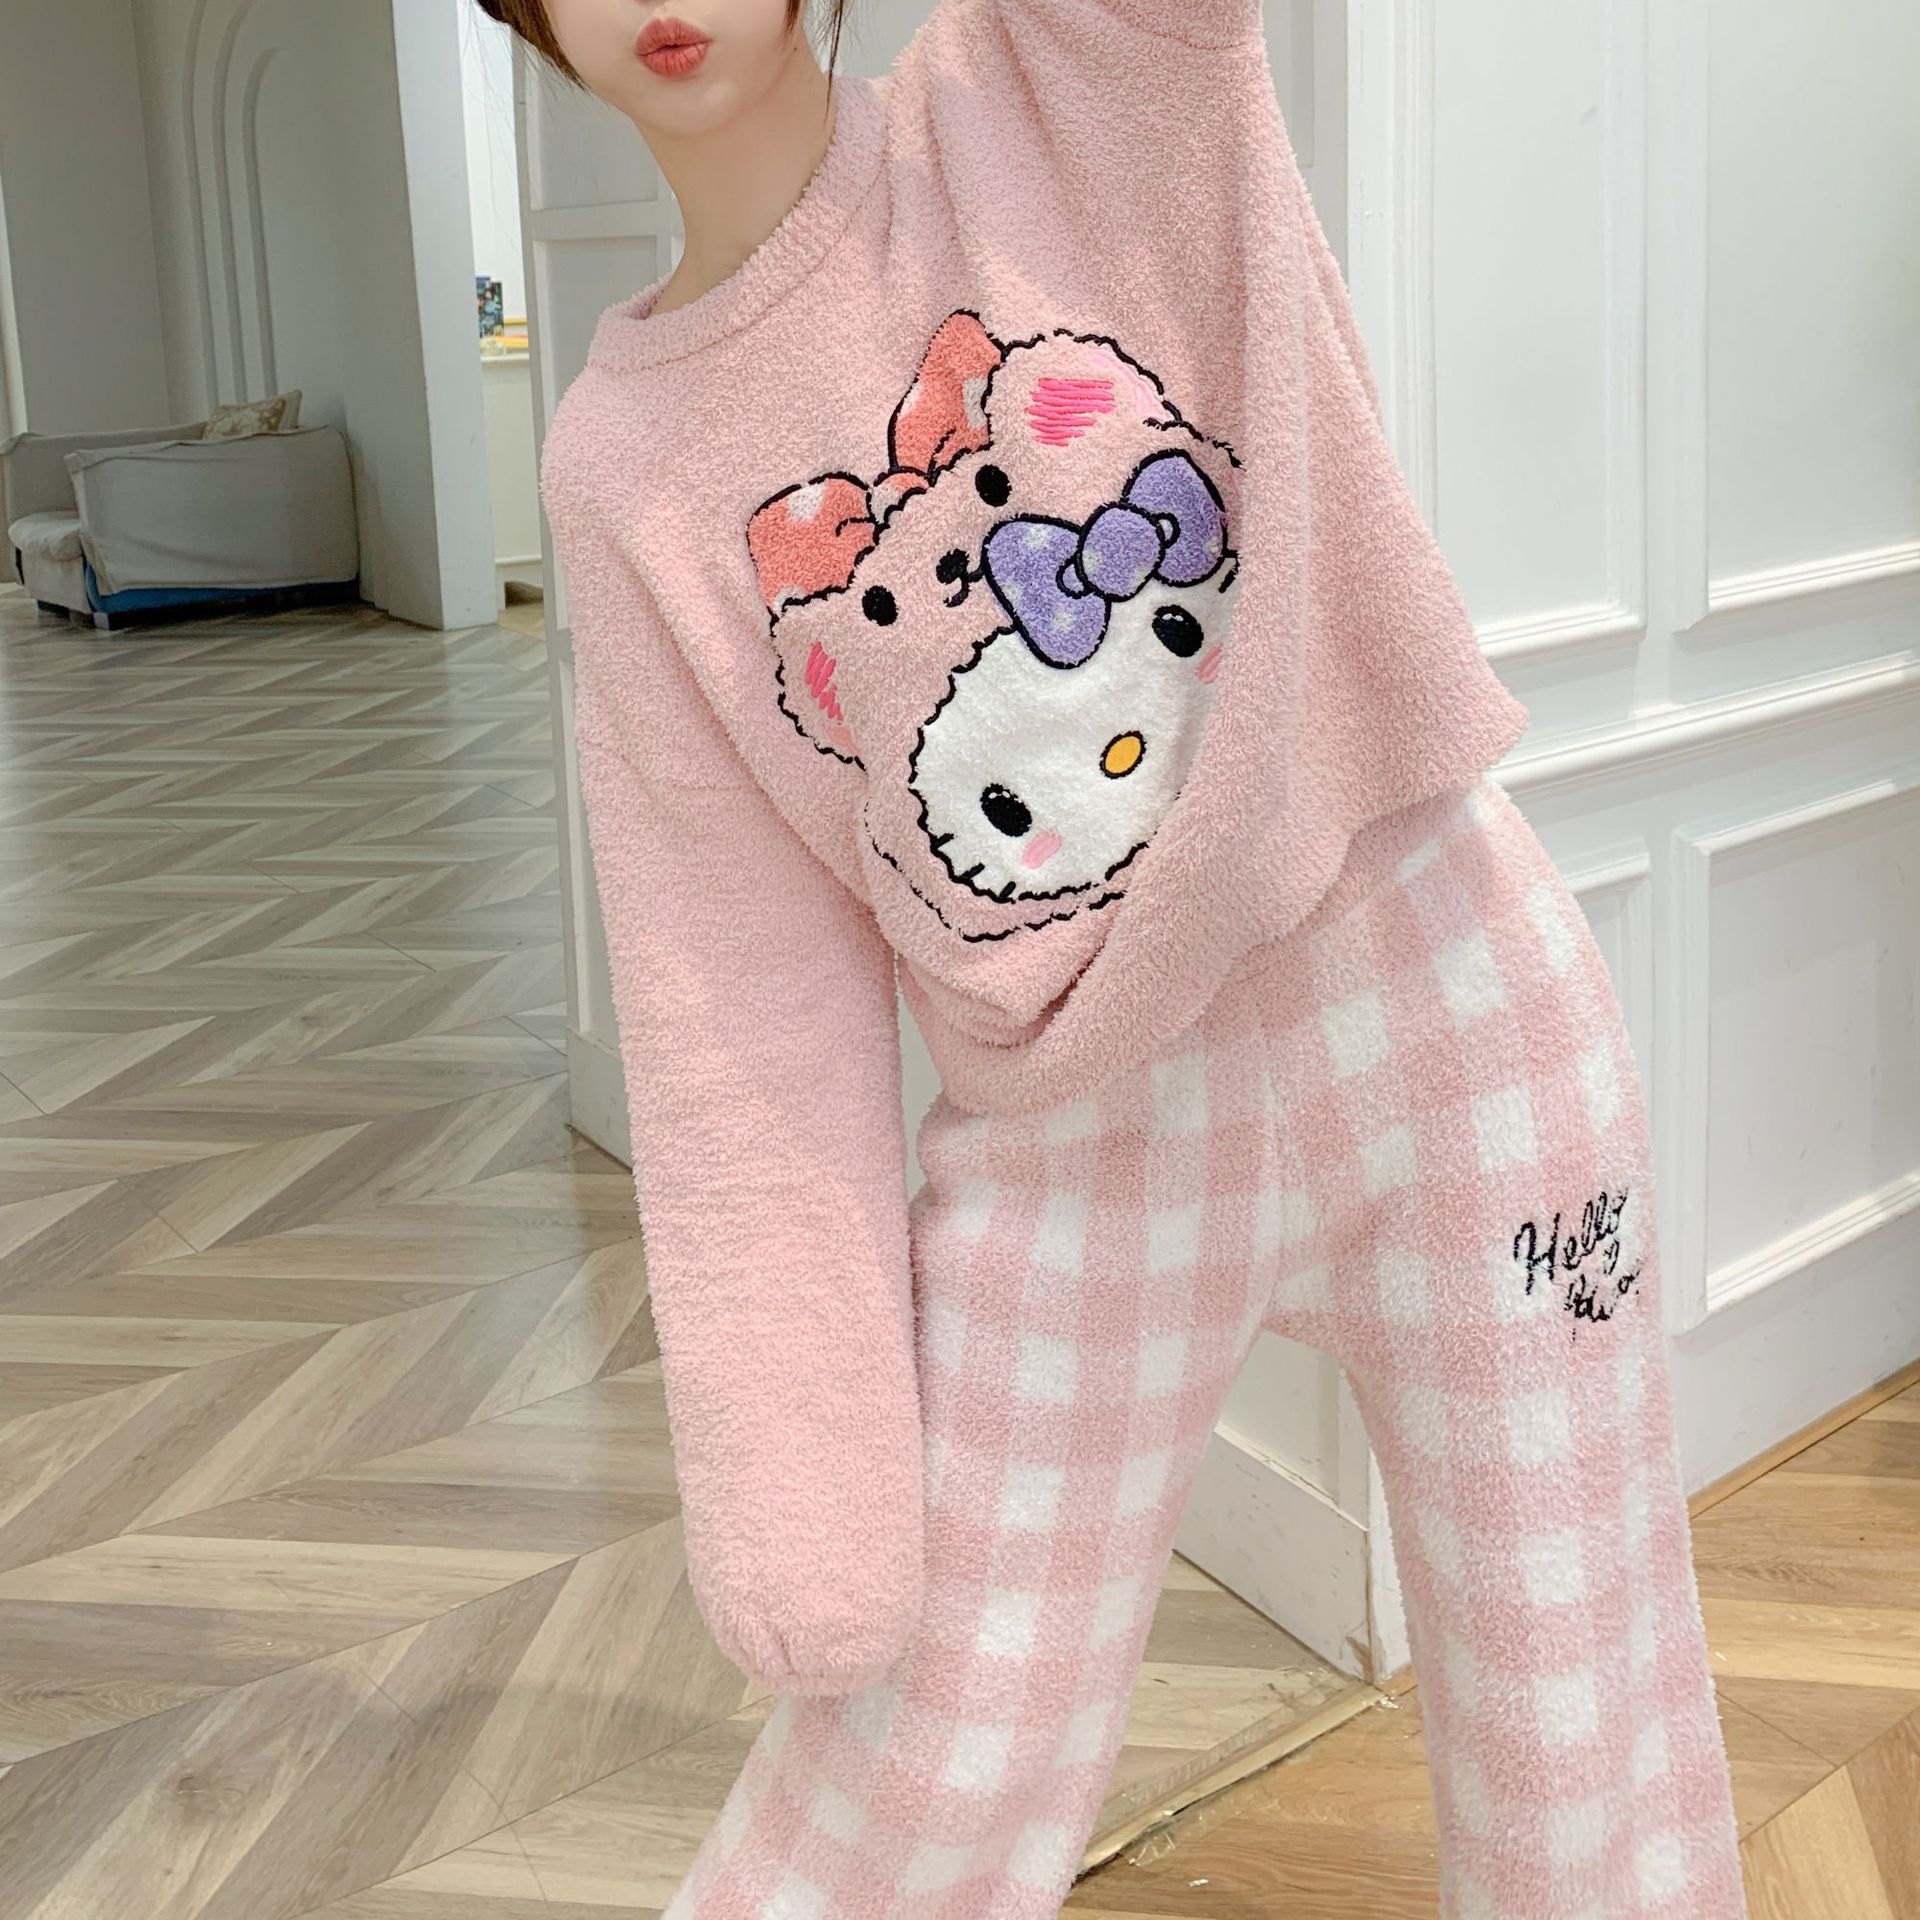 Fuzzy Pajama Pants | Shop Intimates & Sleepwear at Papaya Clothing